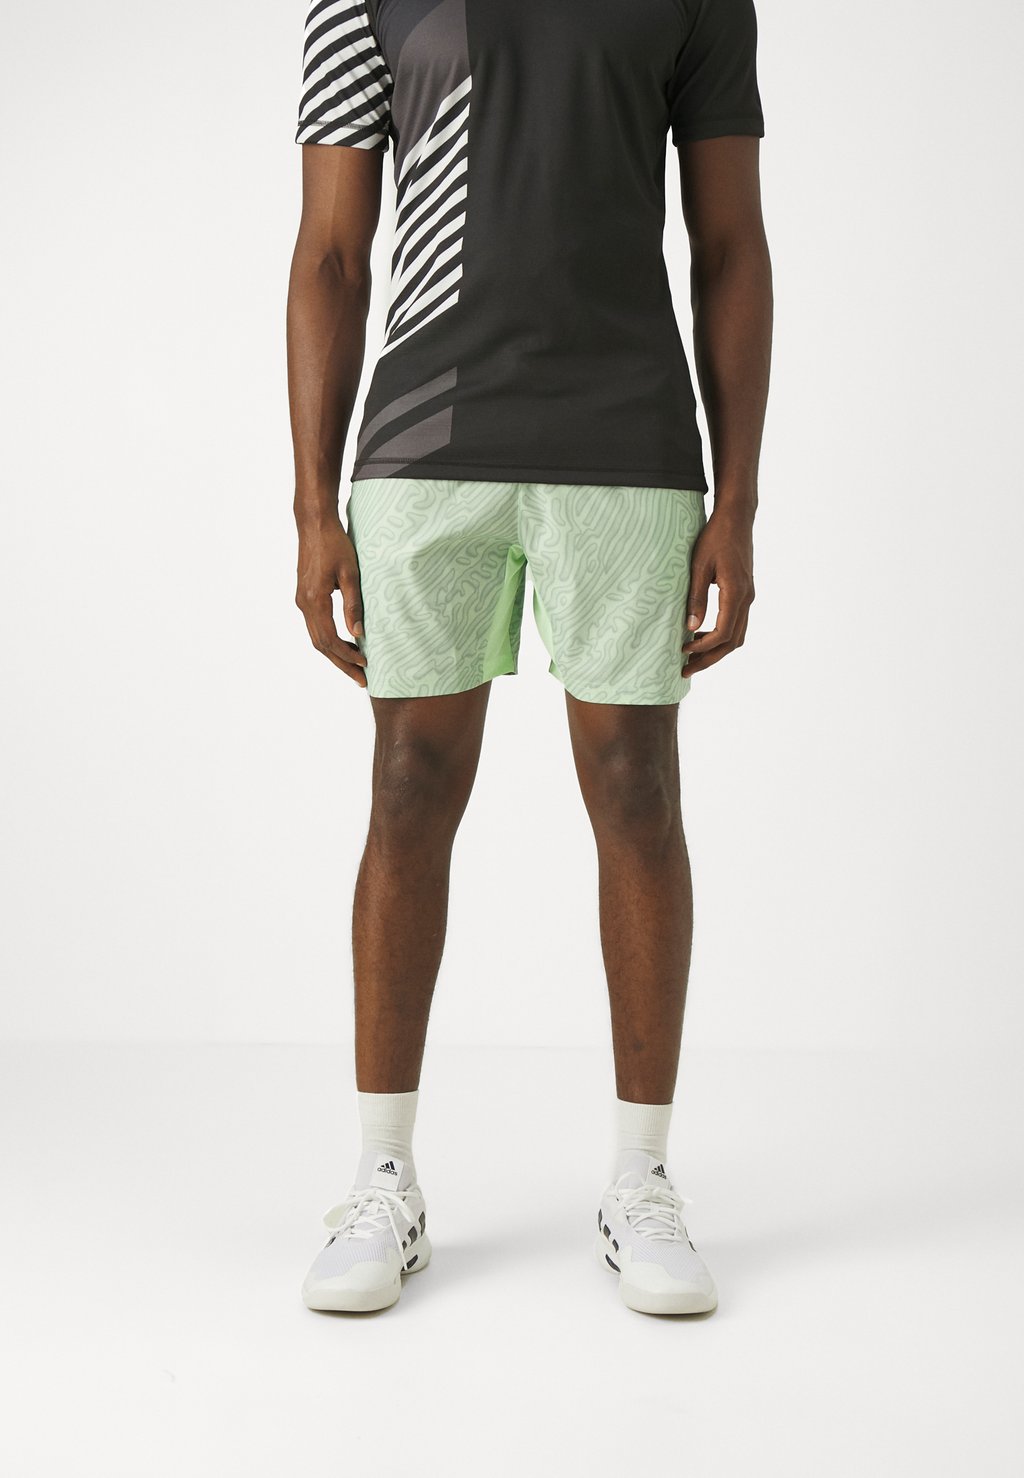 Спортивные шорты Ergo Short Pro Adidas, цвет semi green spark/silver green